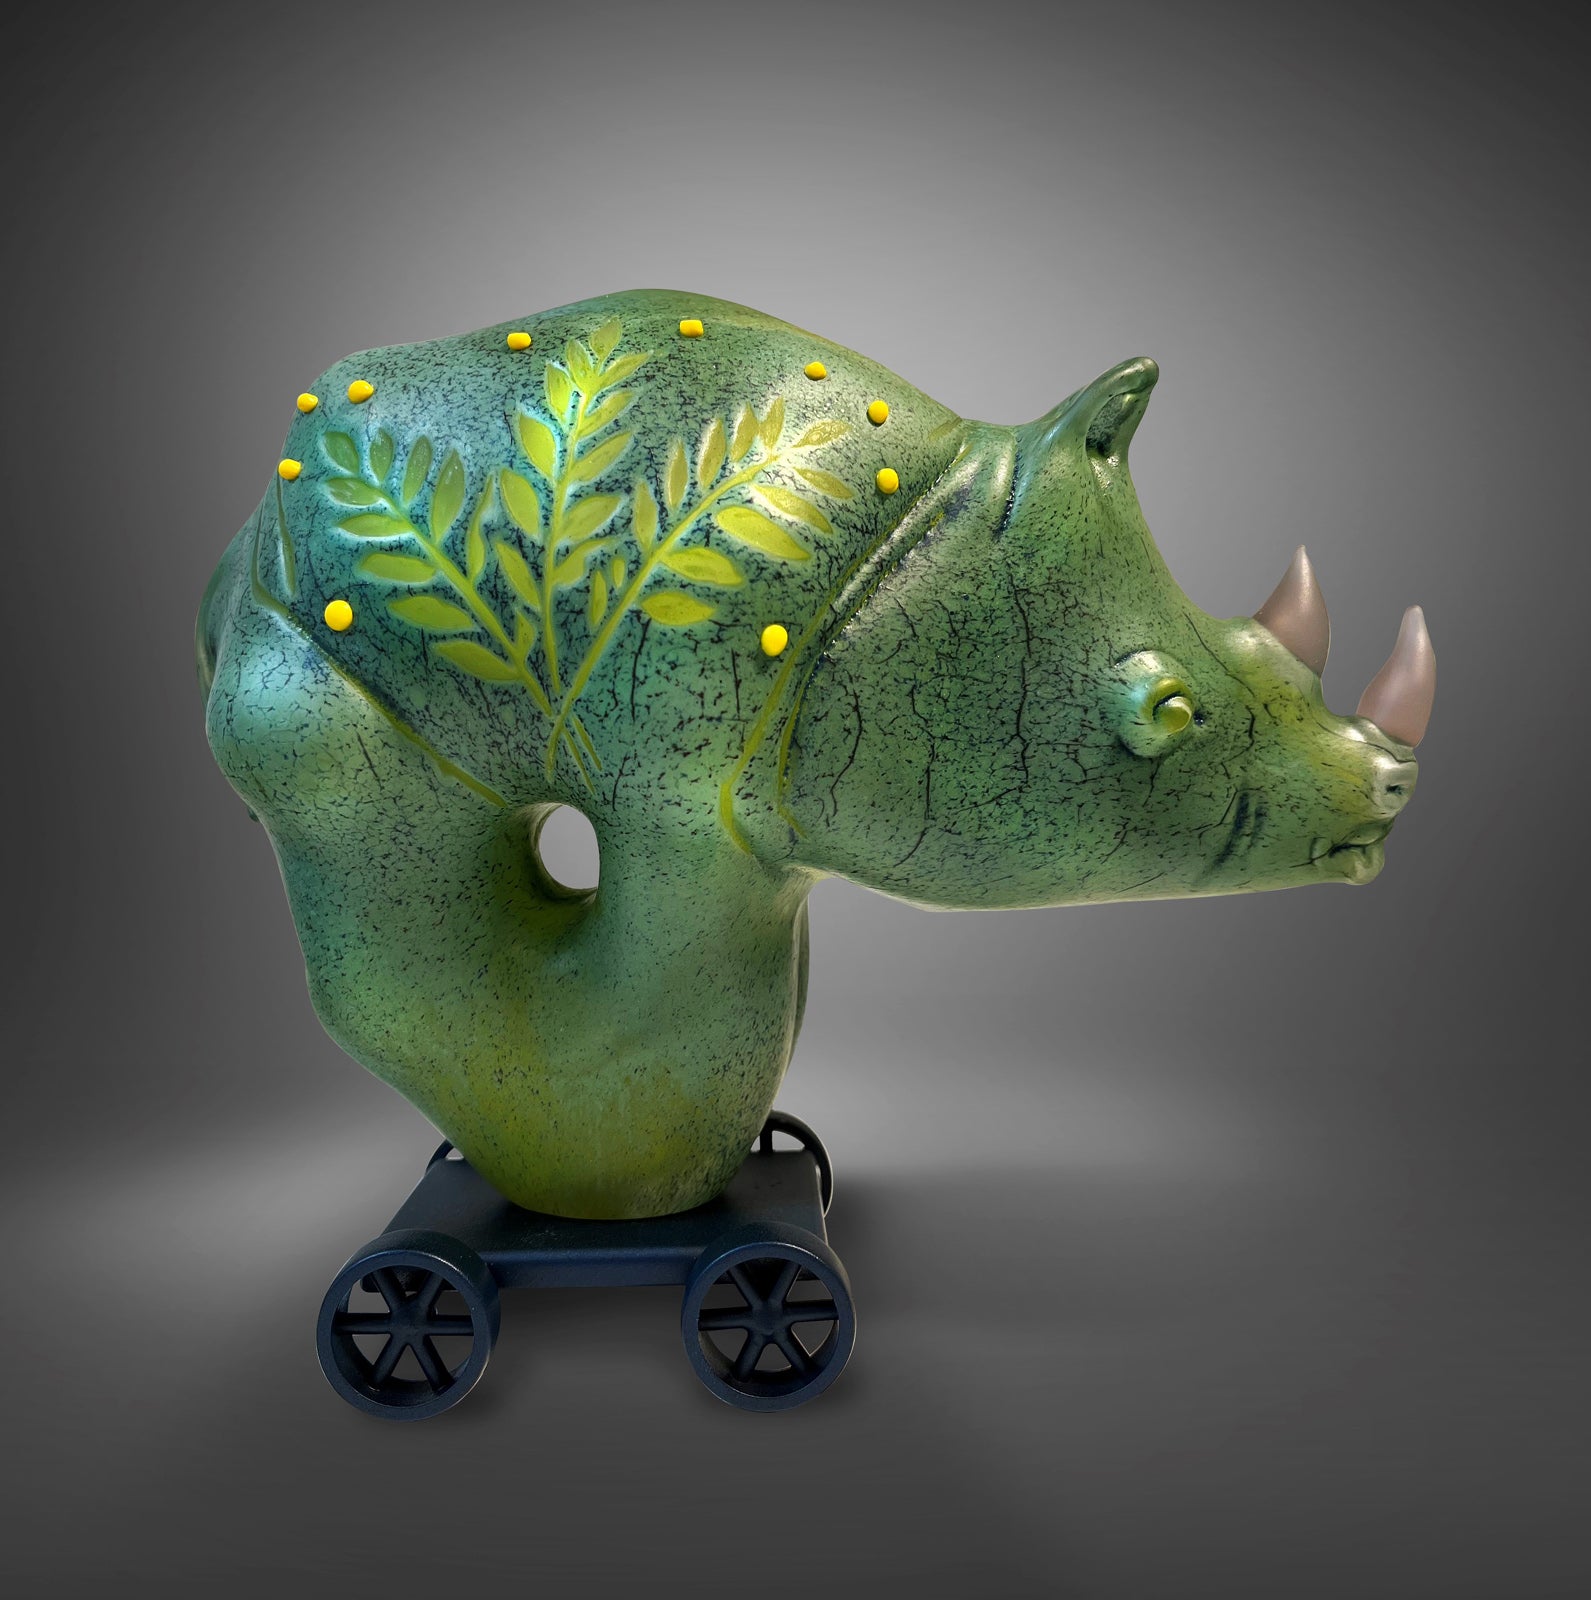 Rhino Tram - Animal Tram Series by Shelley Muzylowski Allen